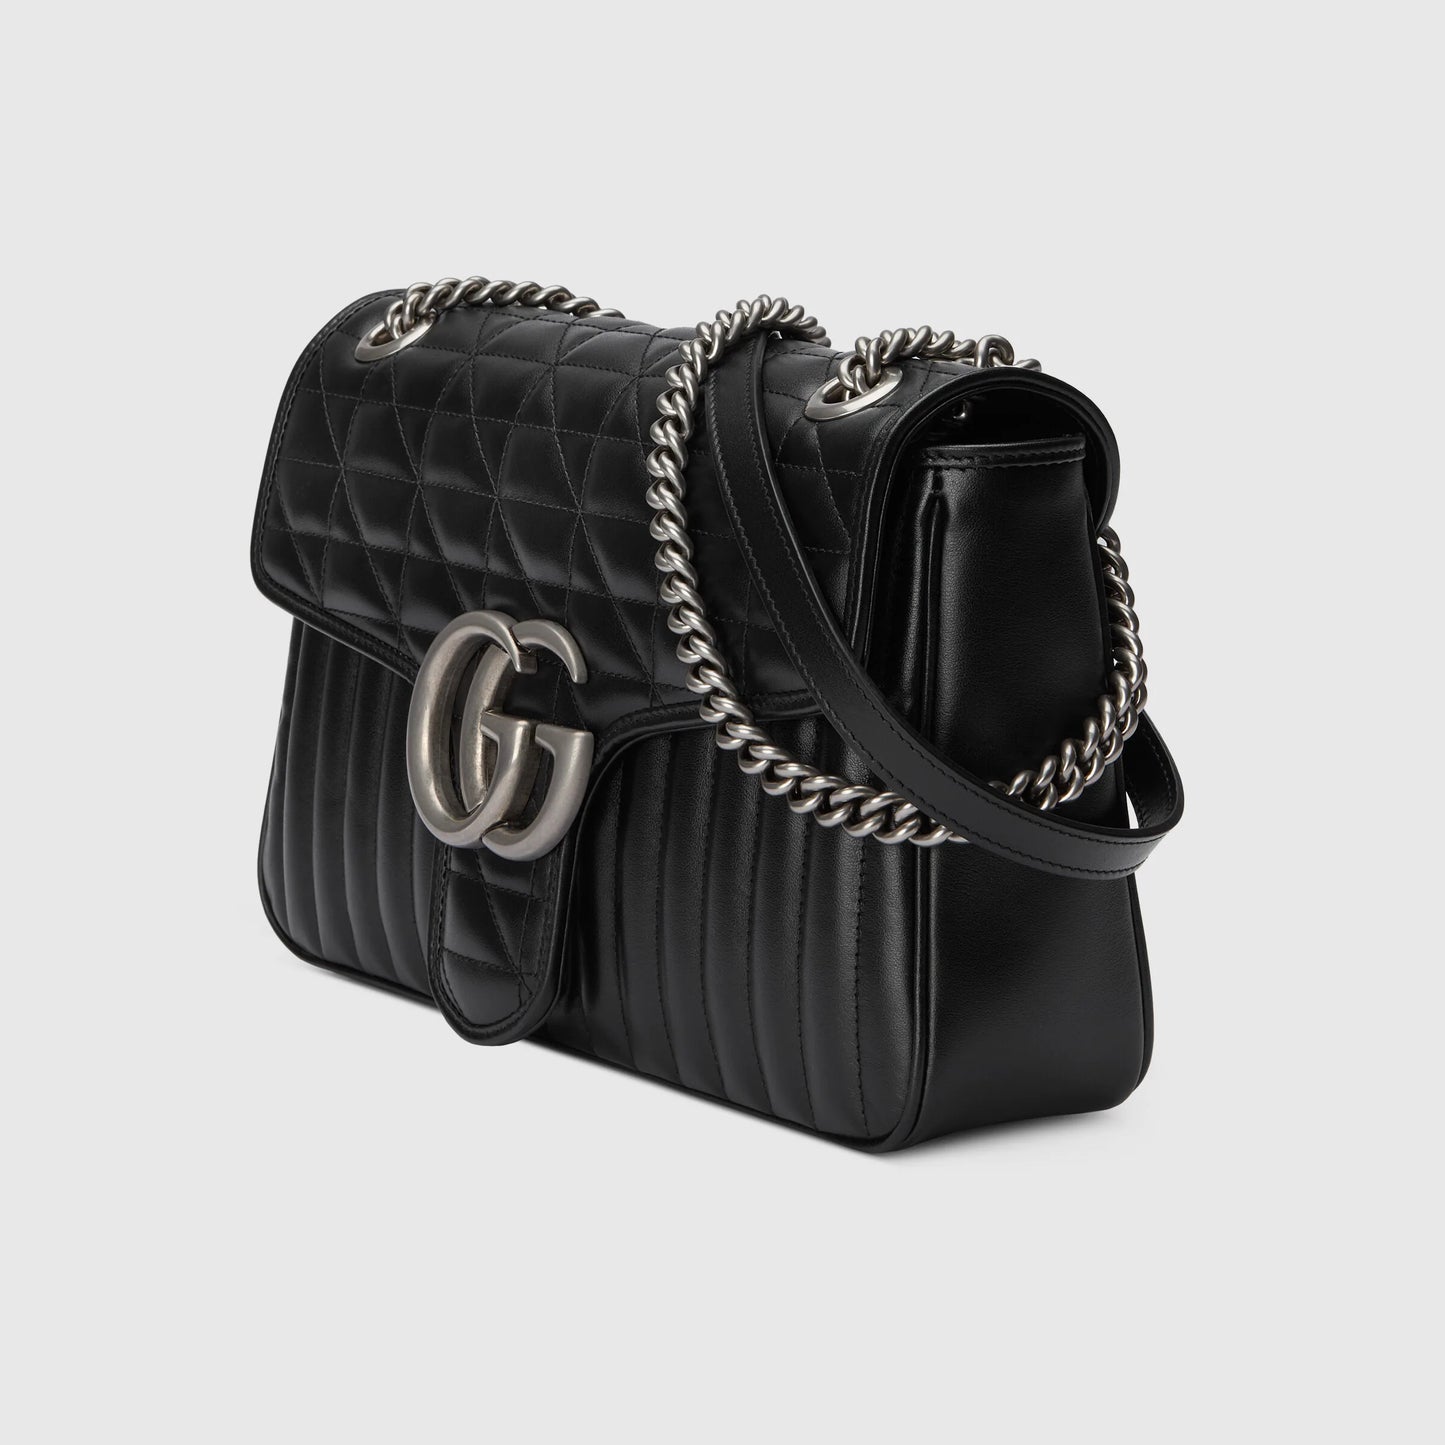 7. Gucci GG Marmont Medium Shoulder Bag ($75) SALE